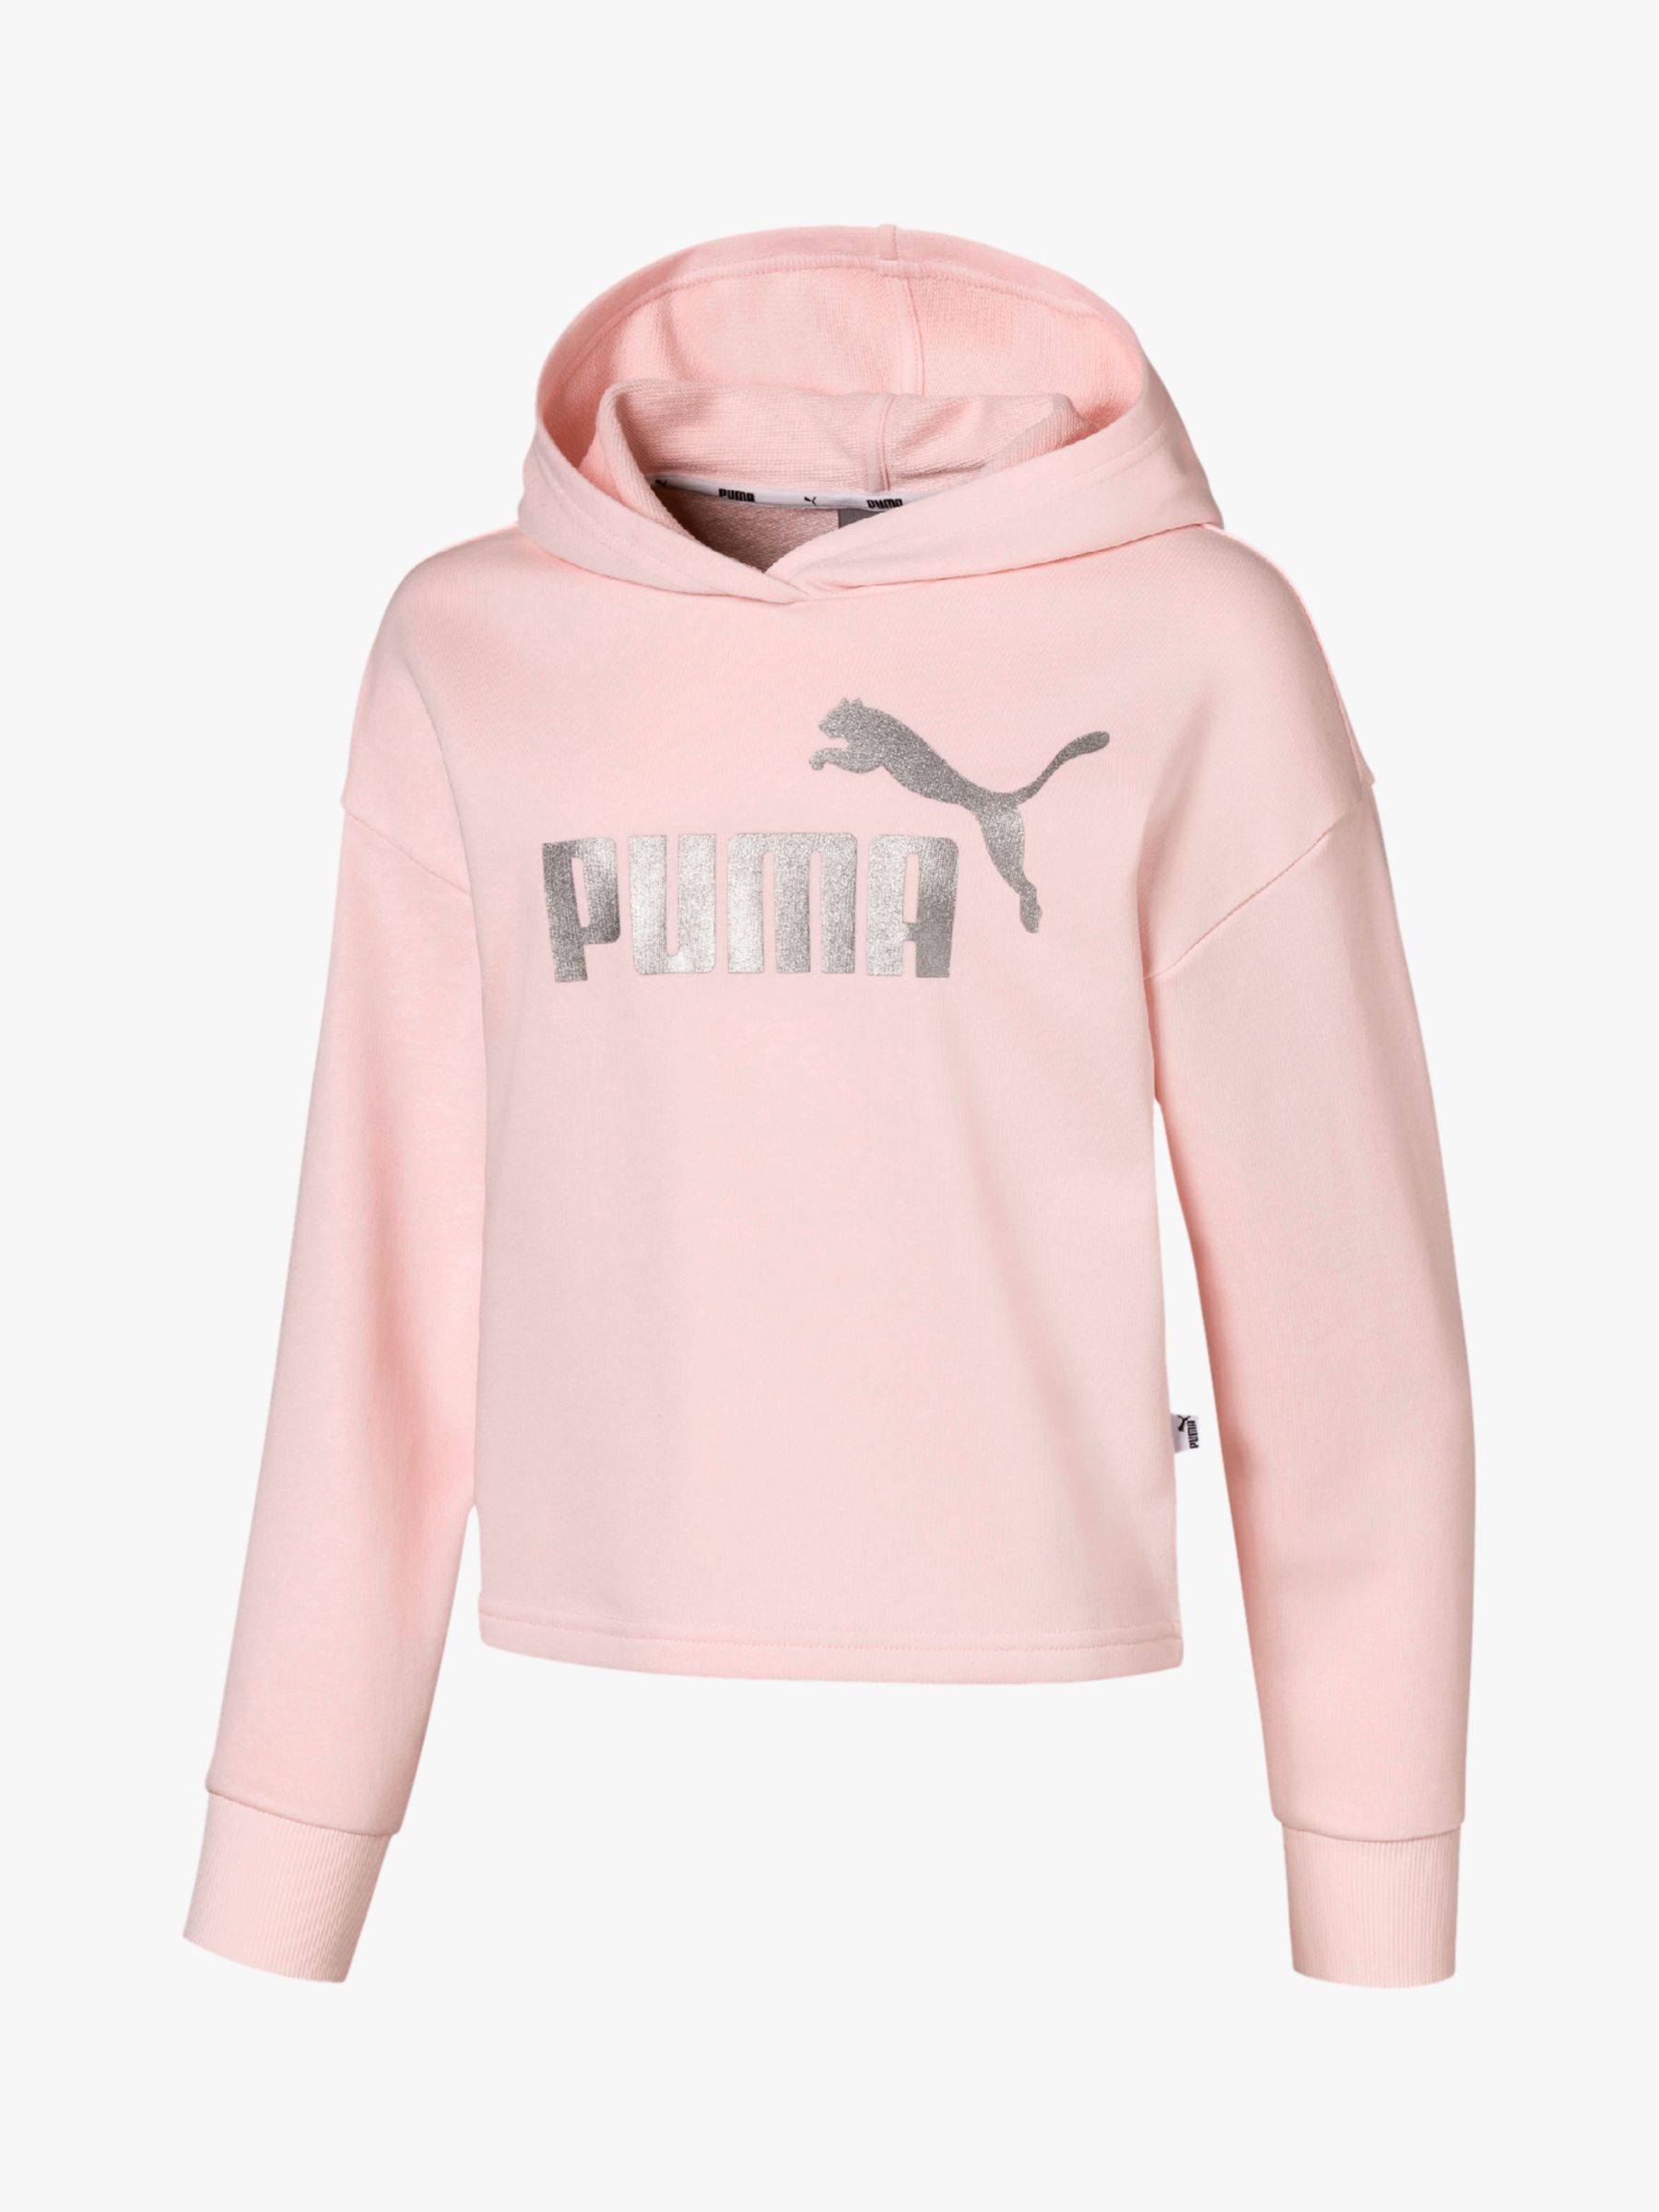 girls puma hoodies